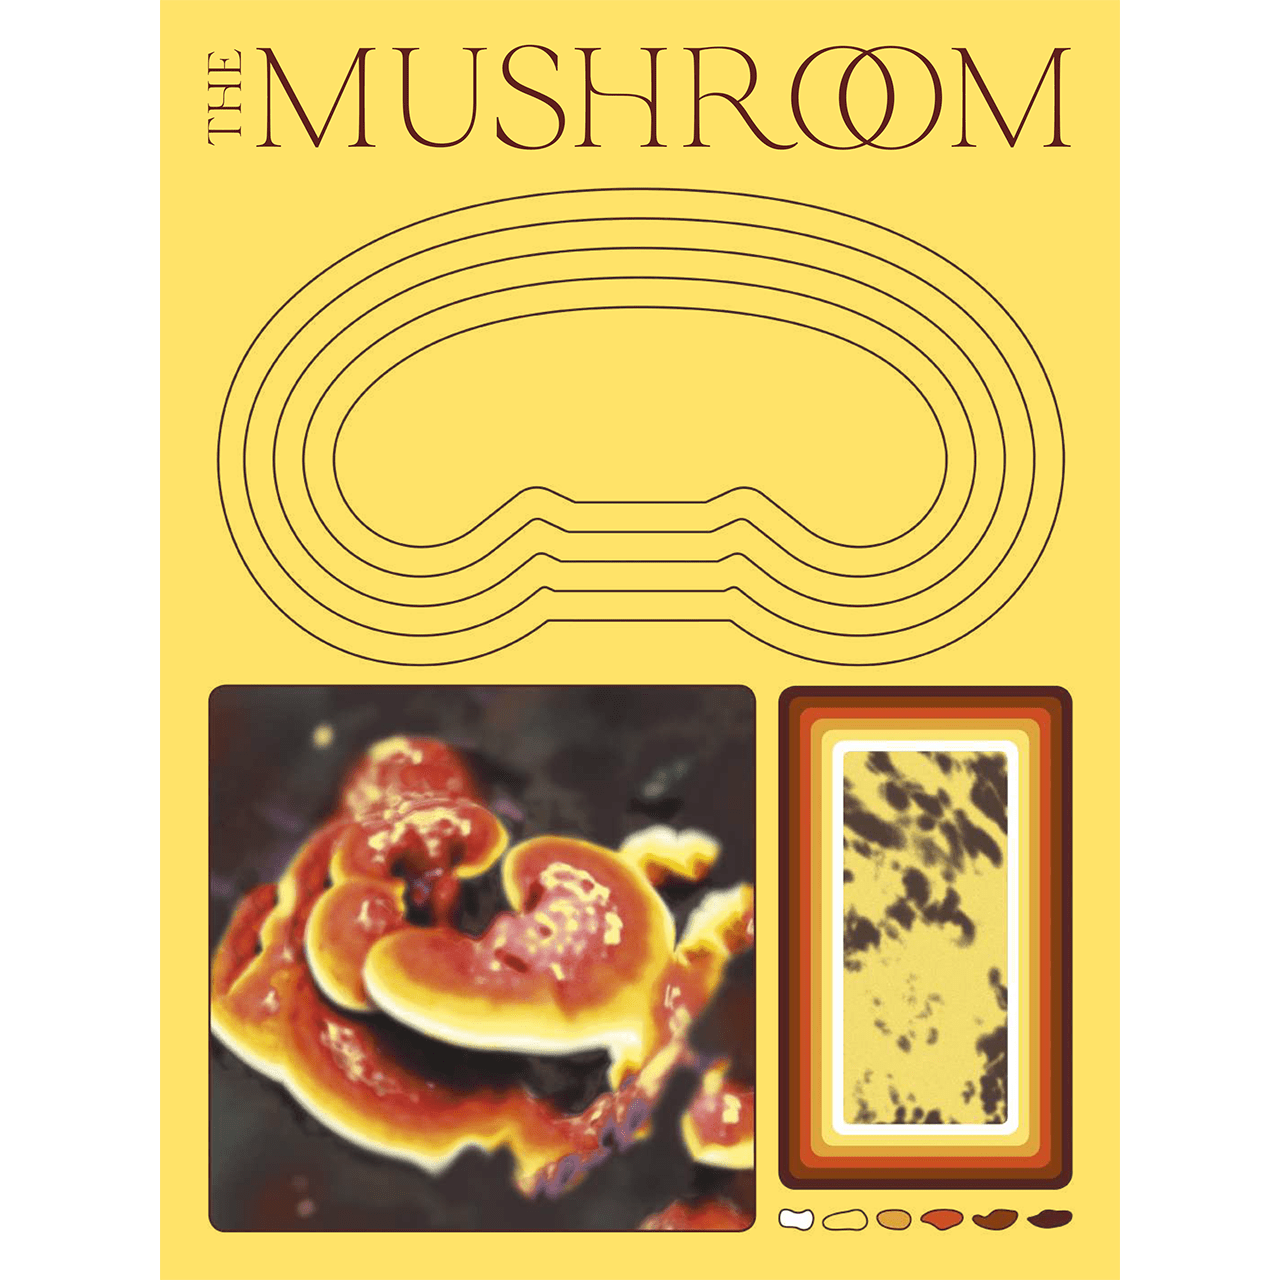 The Mushroom Magazine